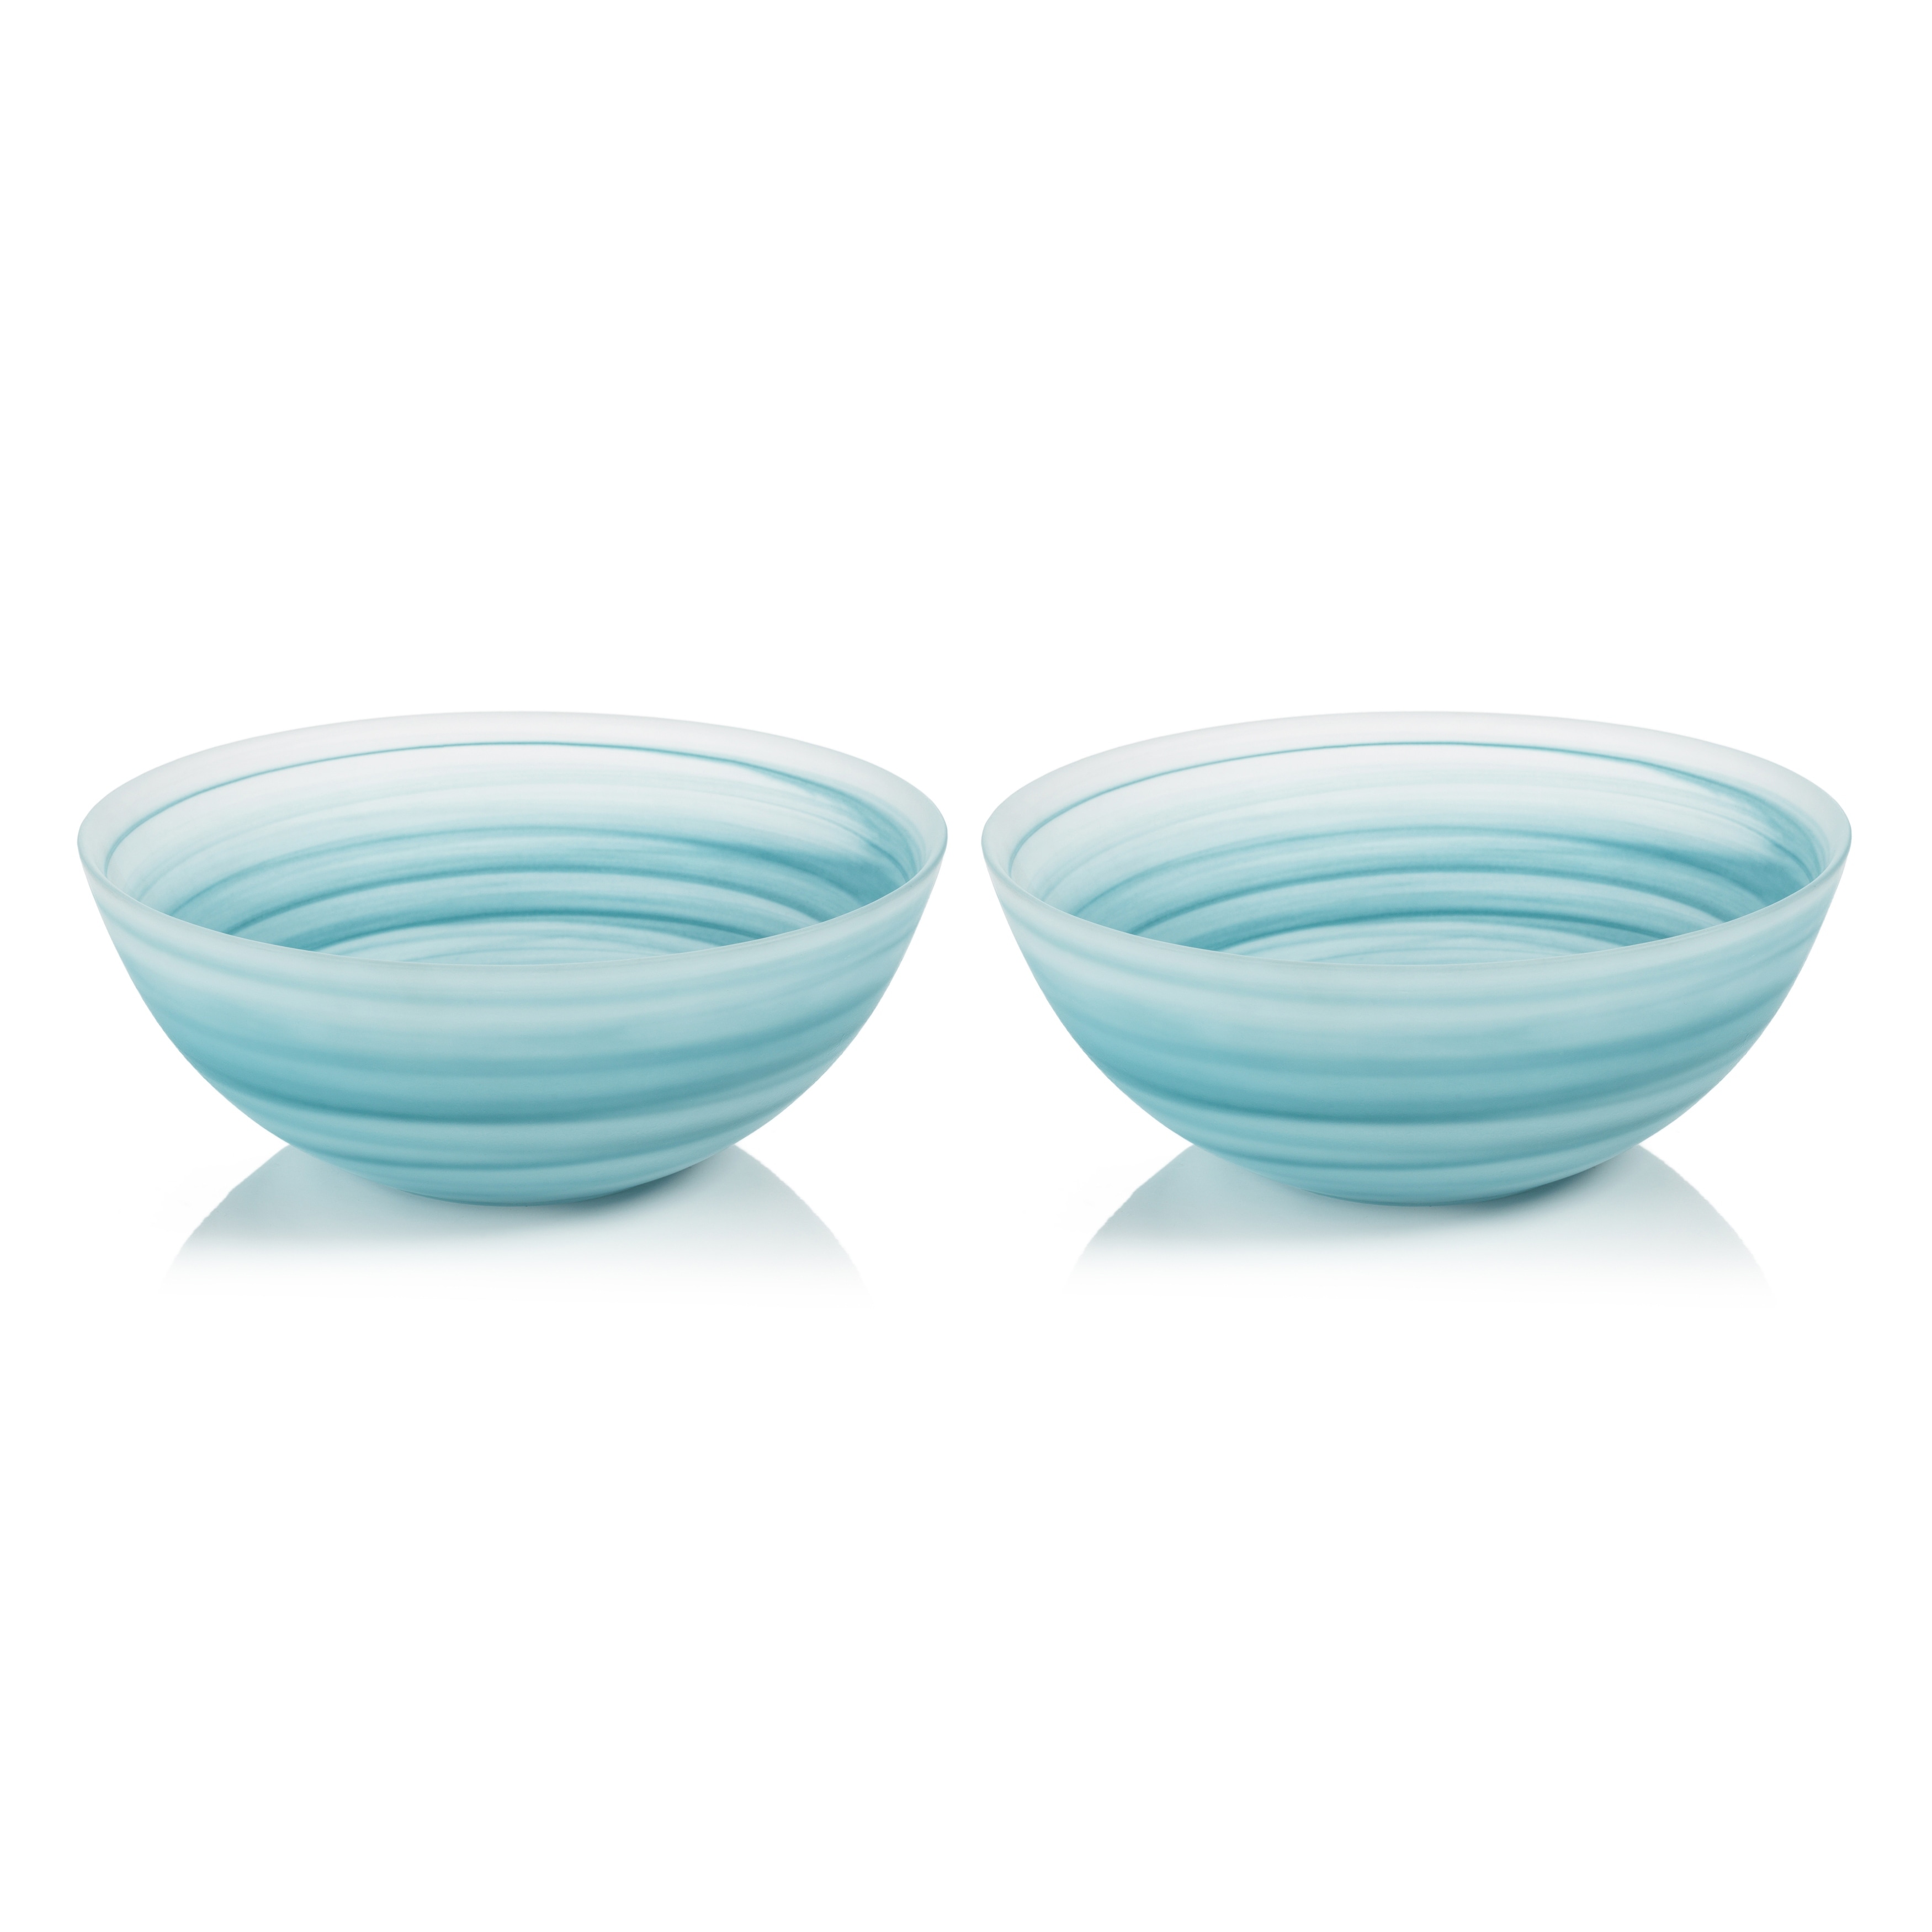 Barren 9.75" Alabaster Glass Bowls, Set of 2 - 9.75" x 4"